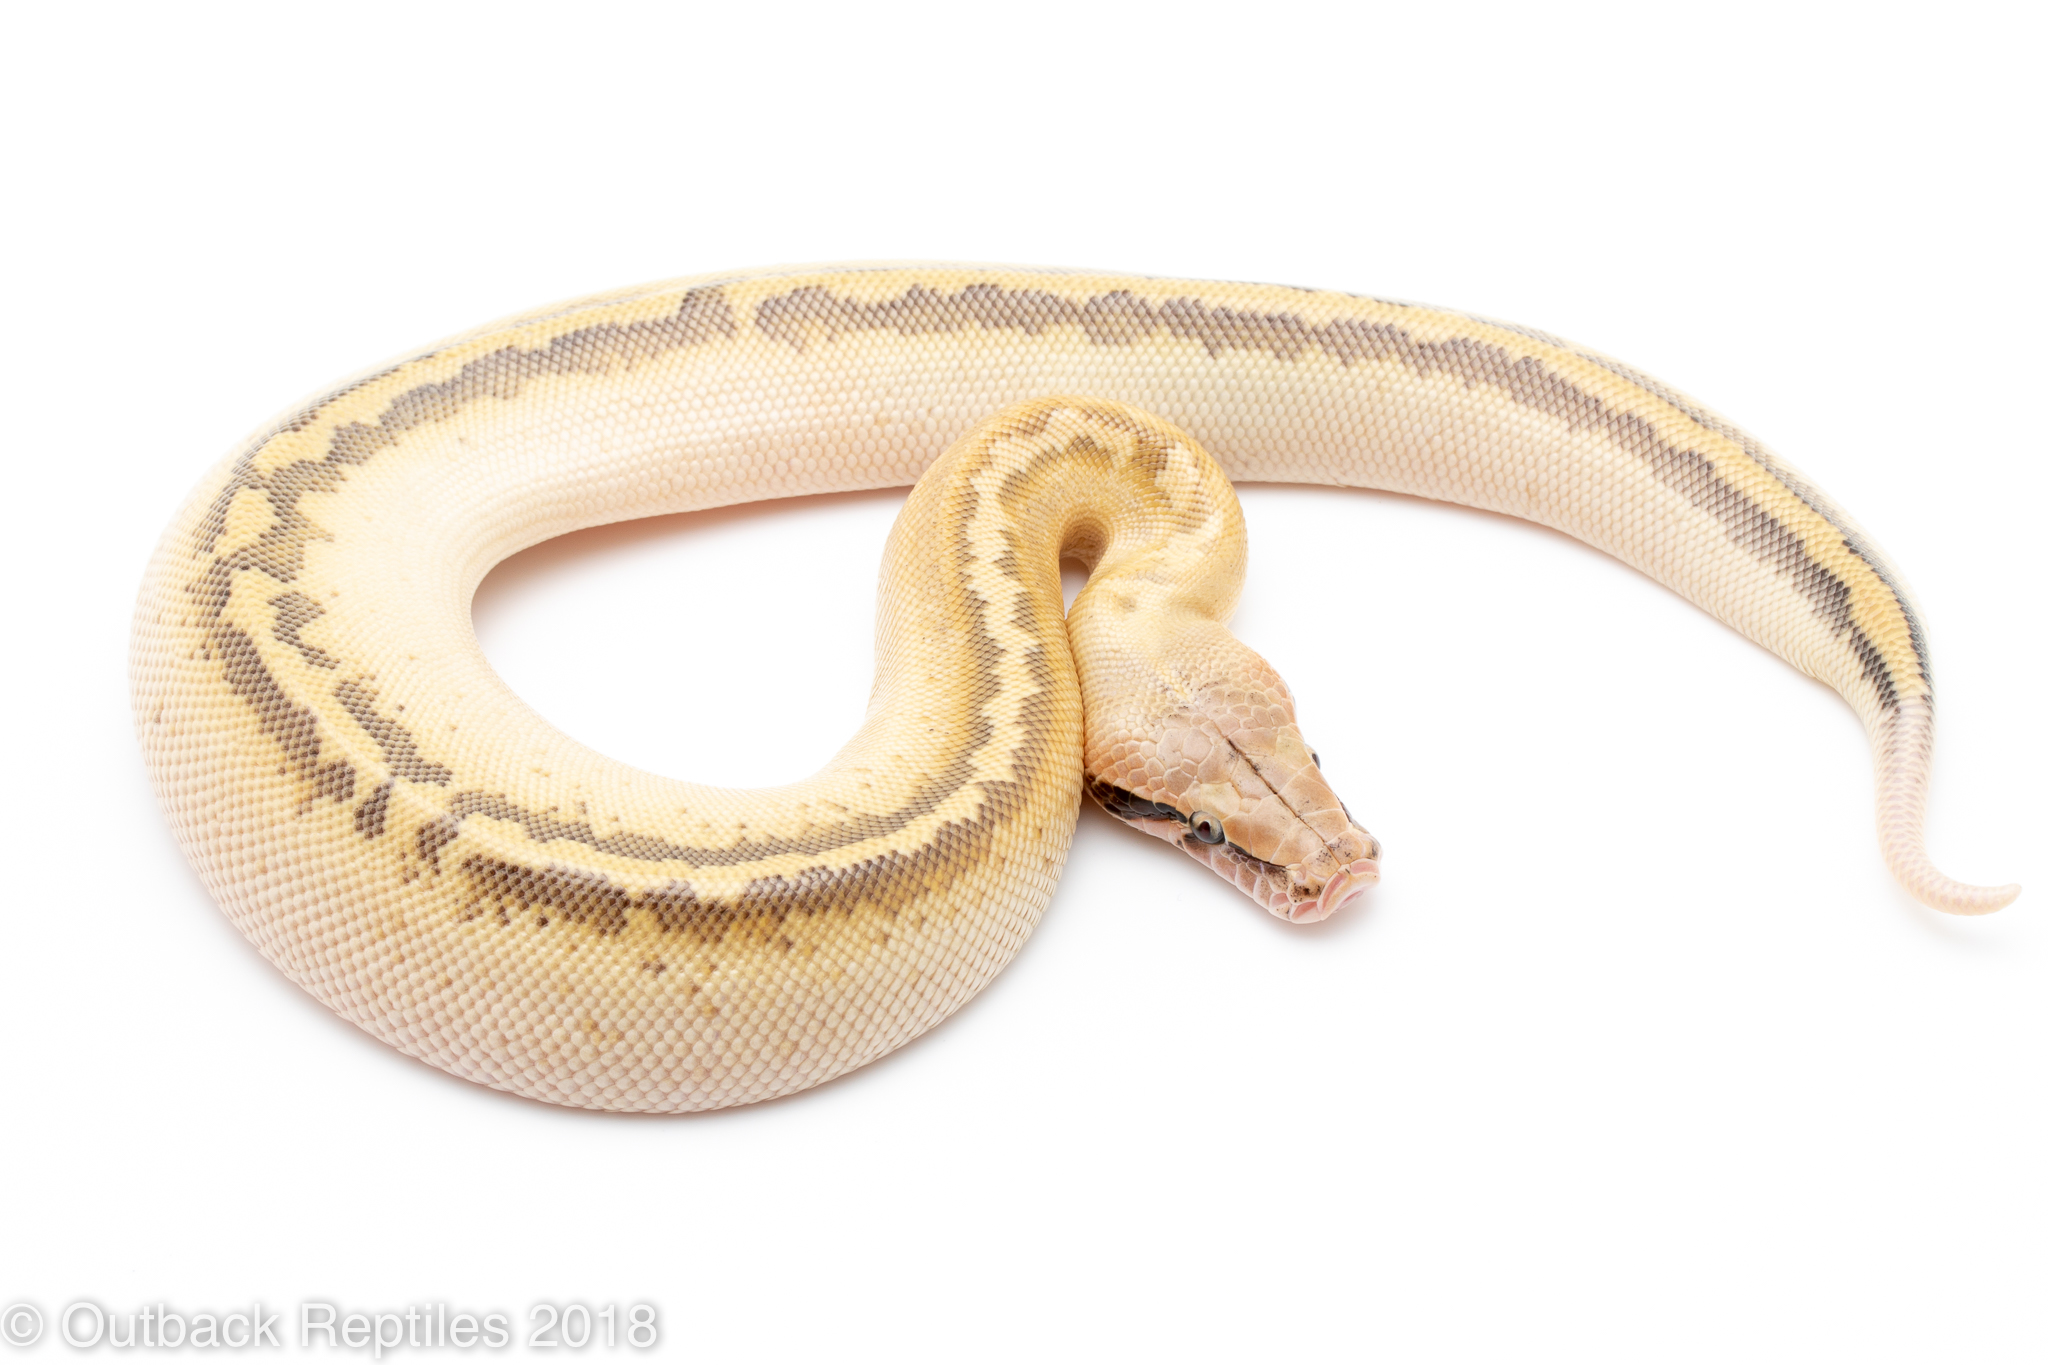 Ivory Blood Python